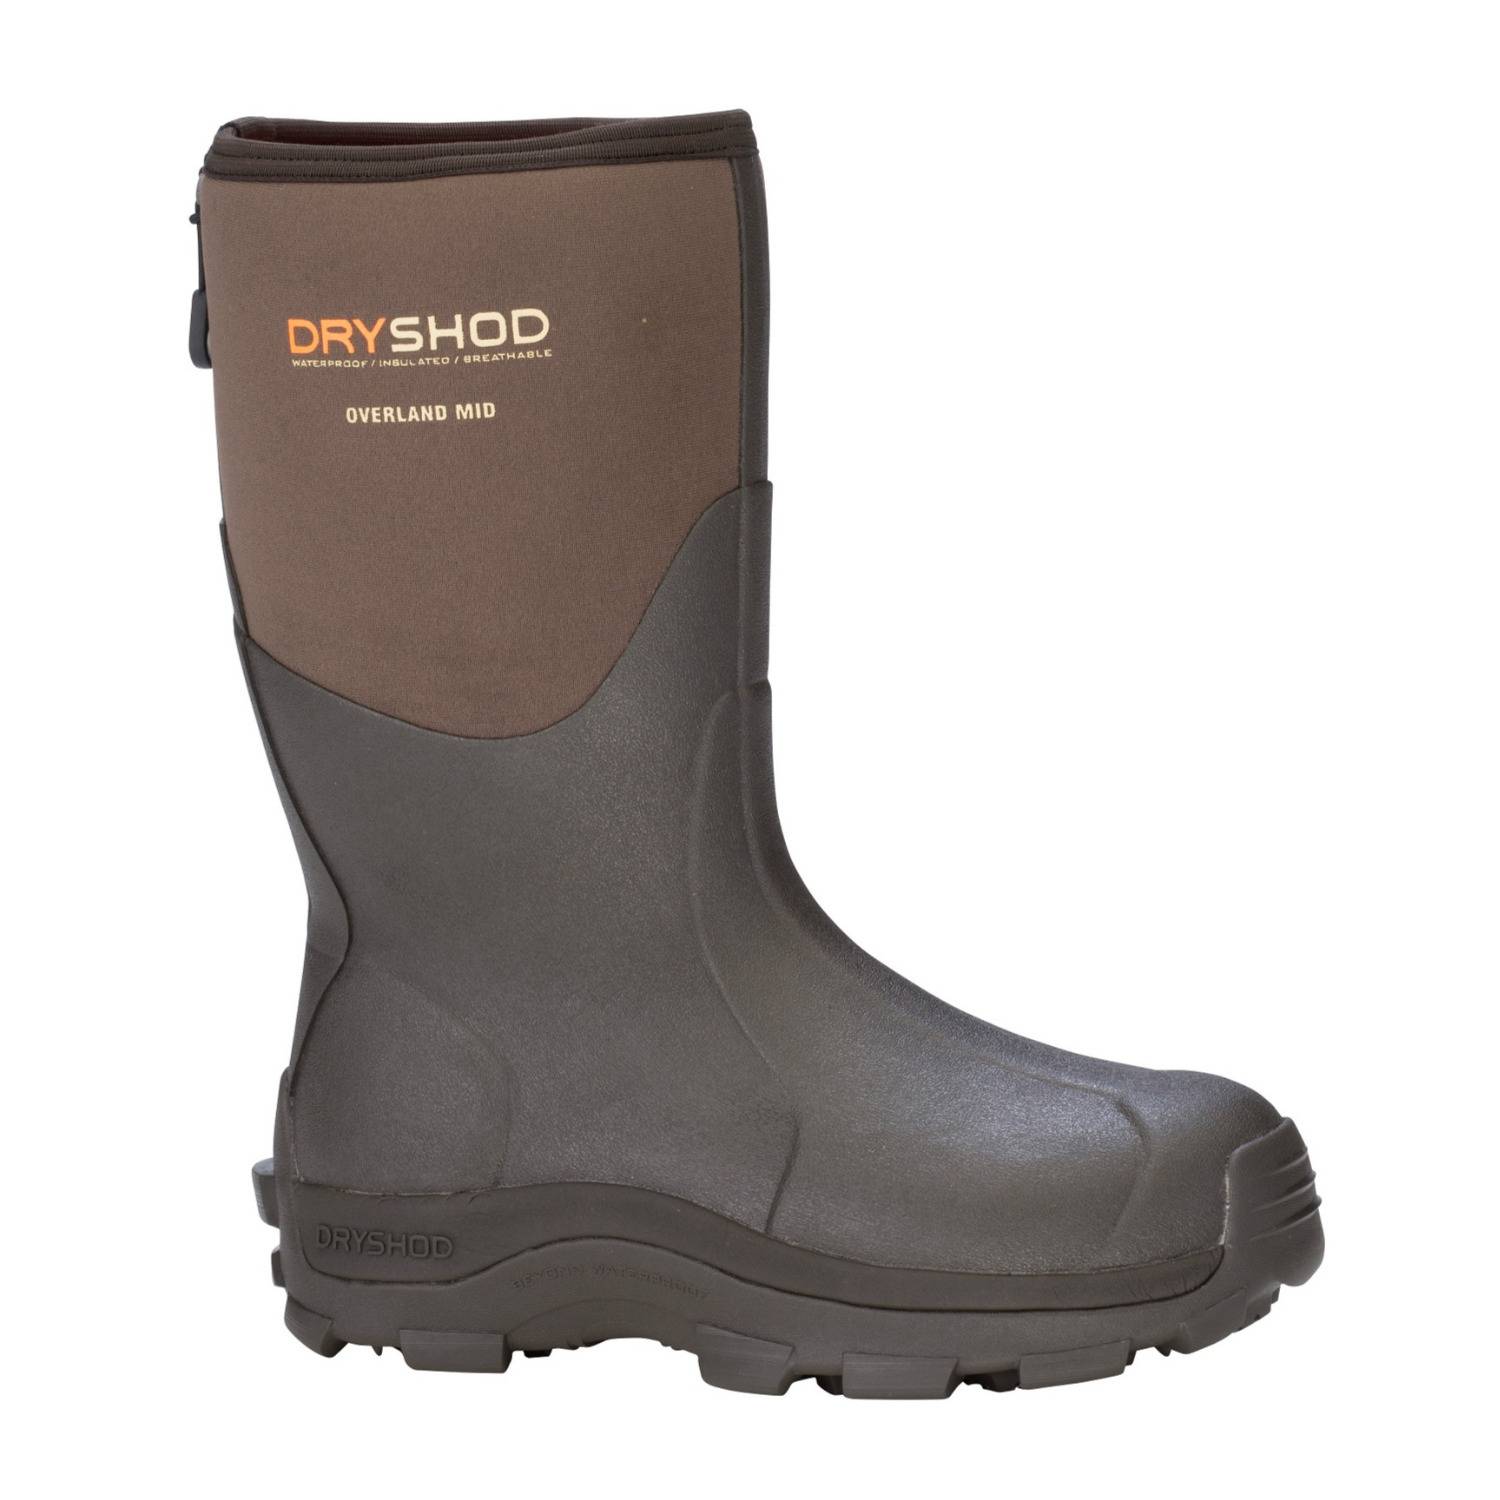 DryShod Overland Mid Men’s Premium Outdoor Sport Boot (Size 12, Khaki/Brown)